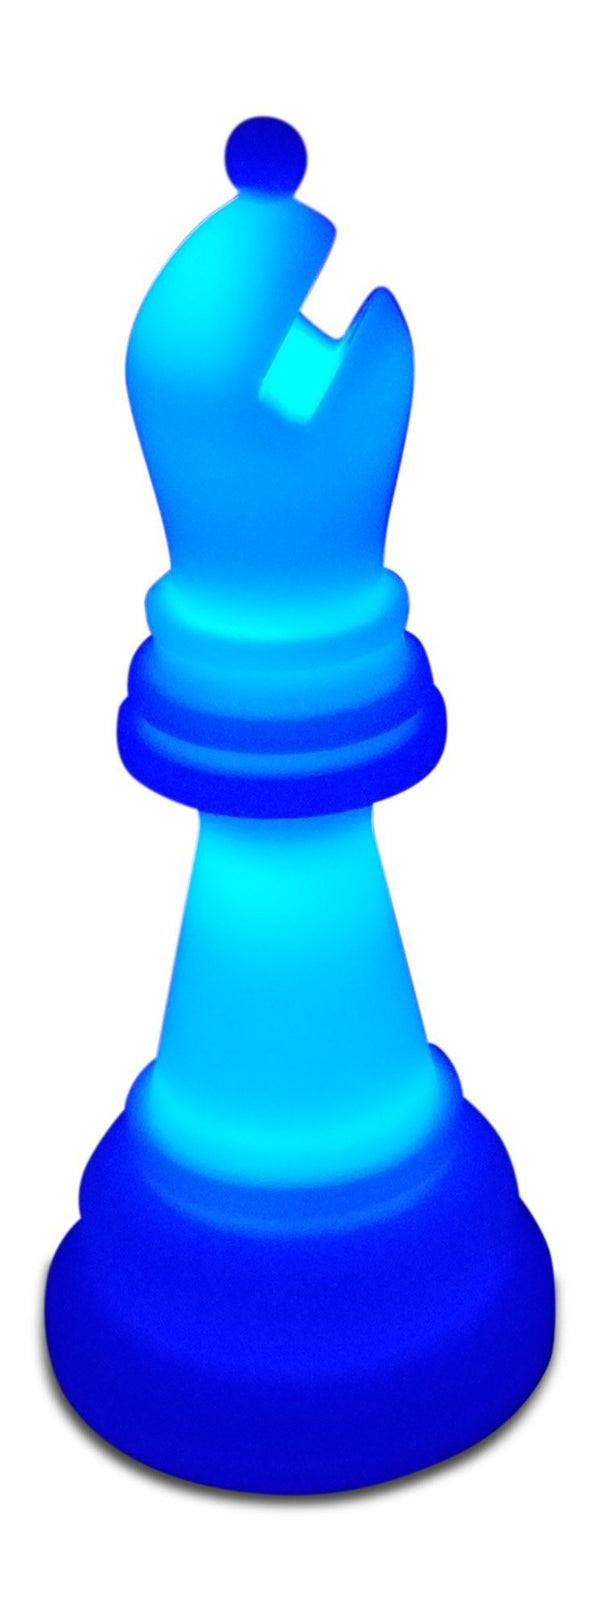 MegaChess 20 Inch Perfect Bishop Light-Up Giant Chess Piece - Blue |  | MegaChess.com